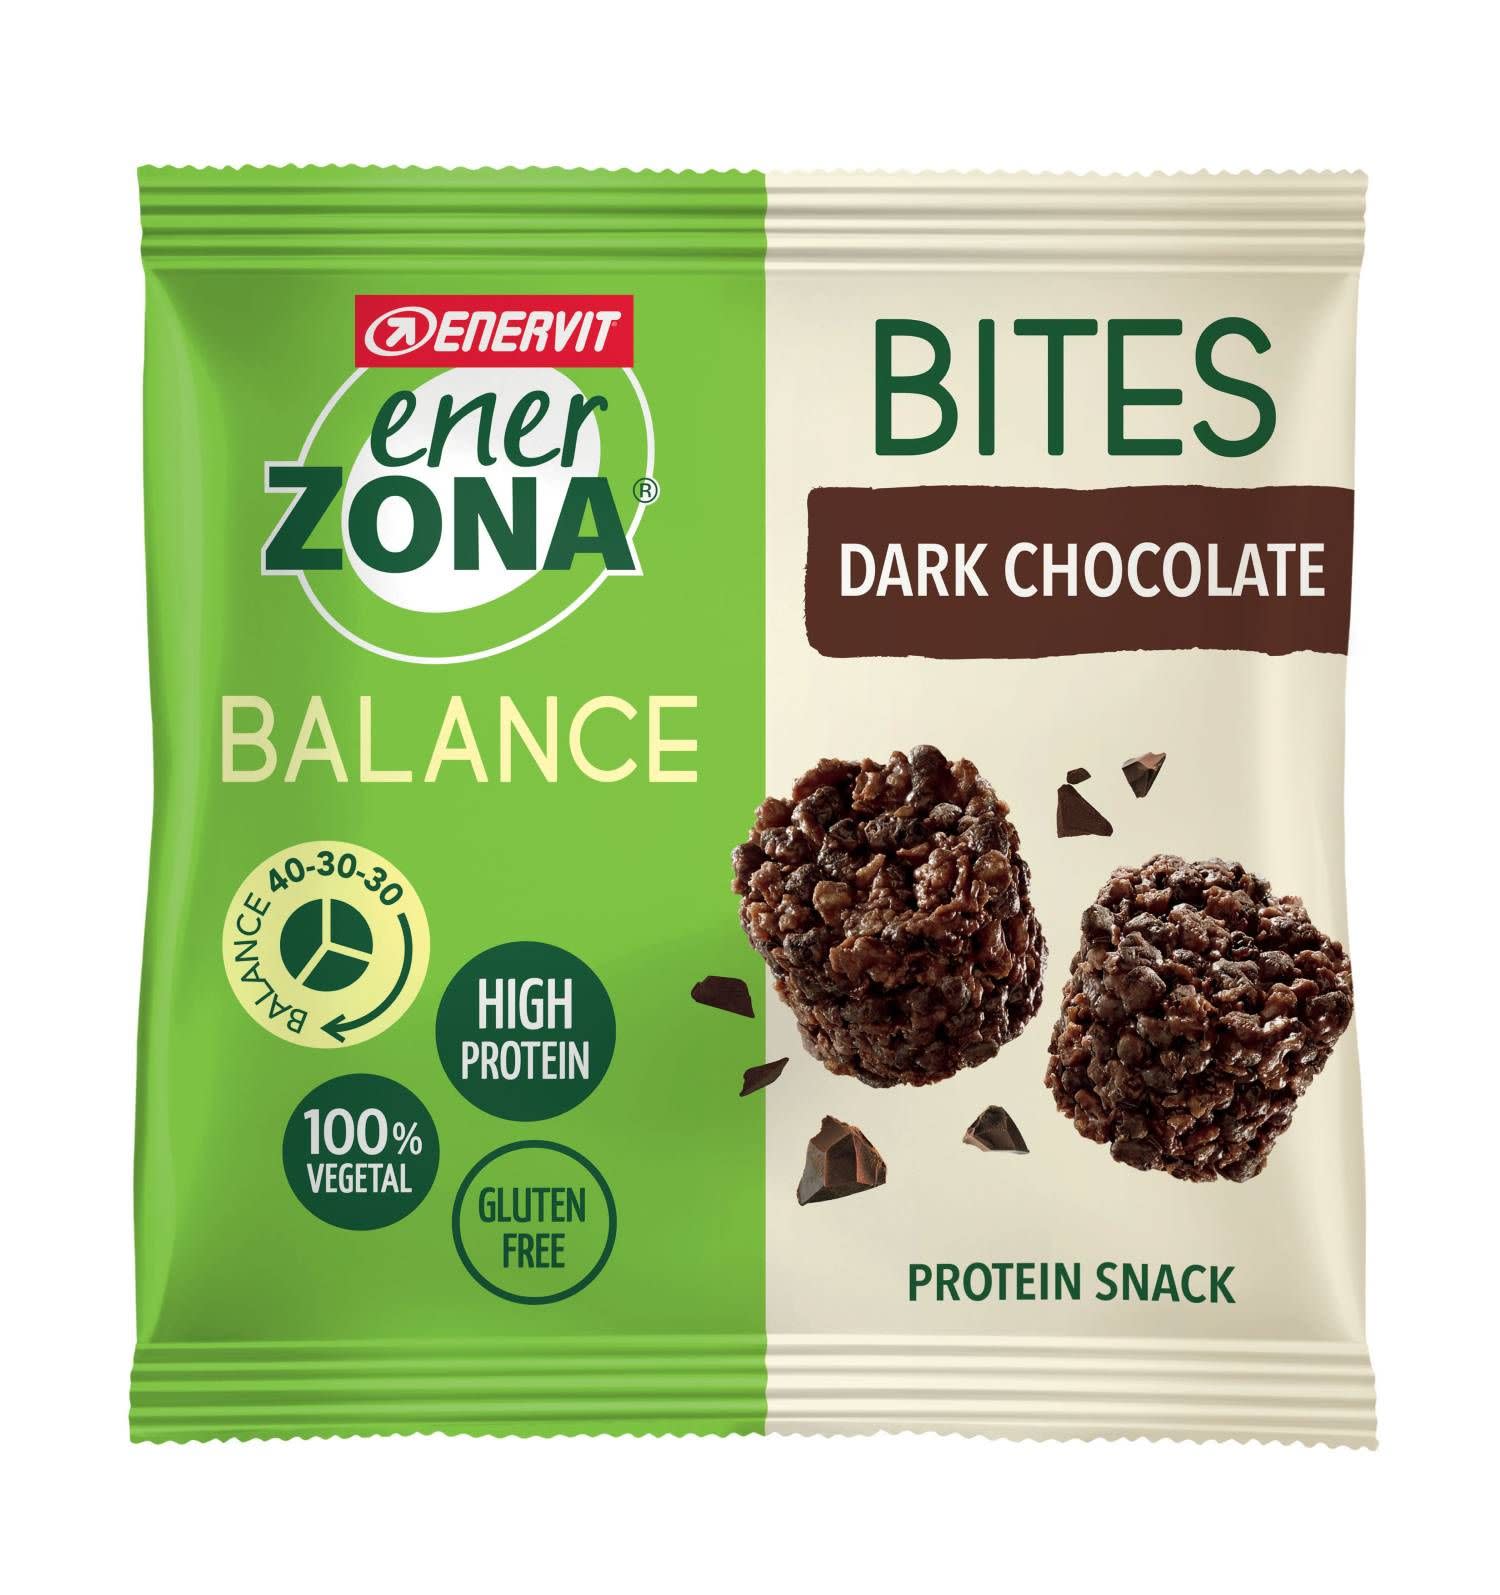 920575610 - Enervit Enerzona Balance Bites Dark Chocolate 1 minipack - 7893240_3.jpg